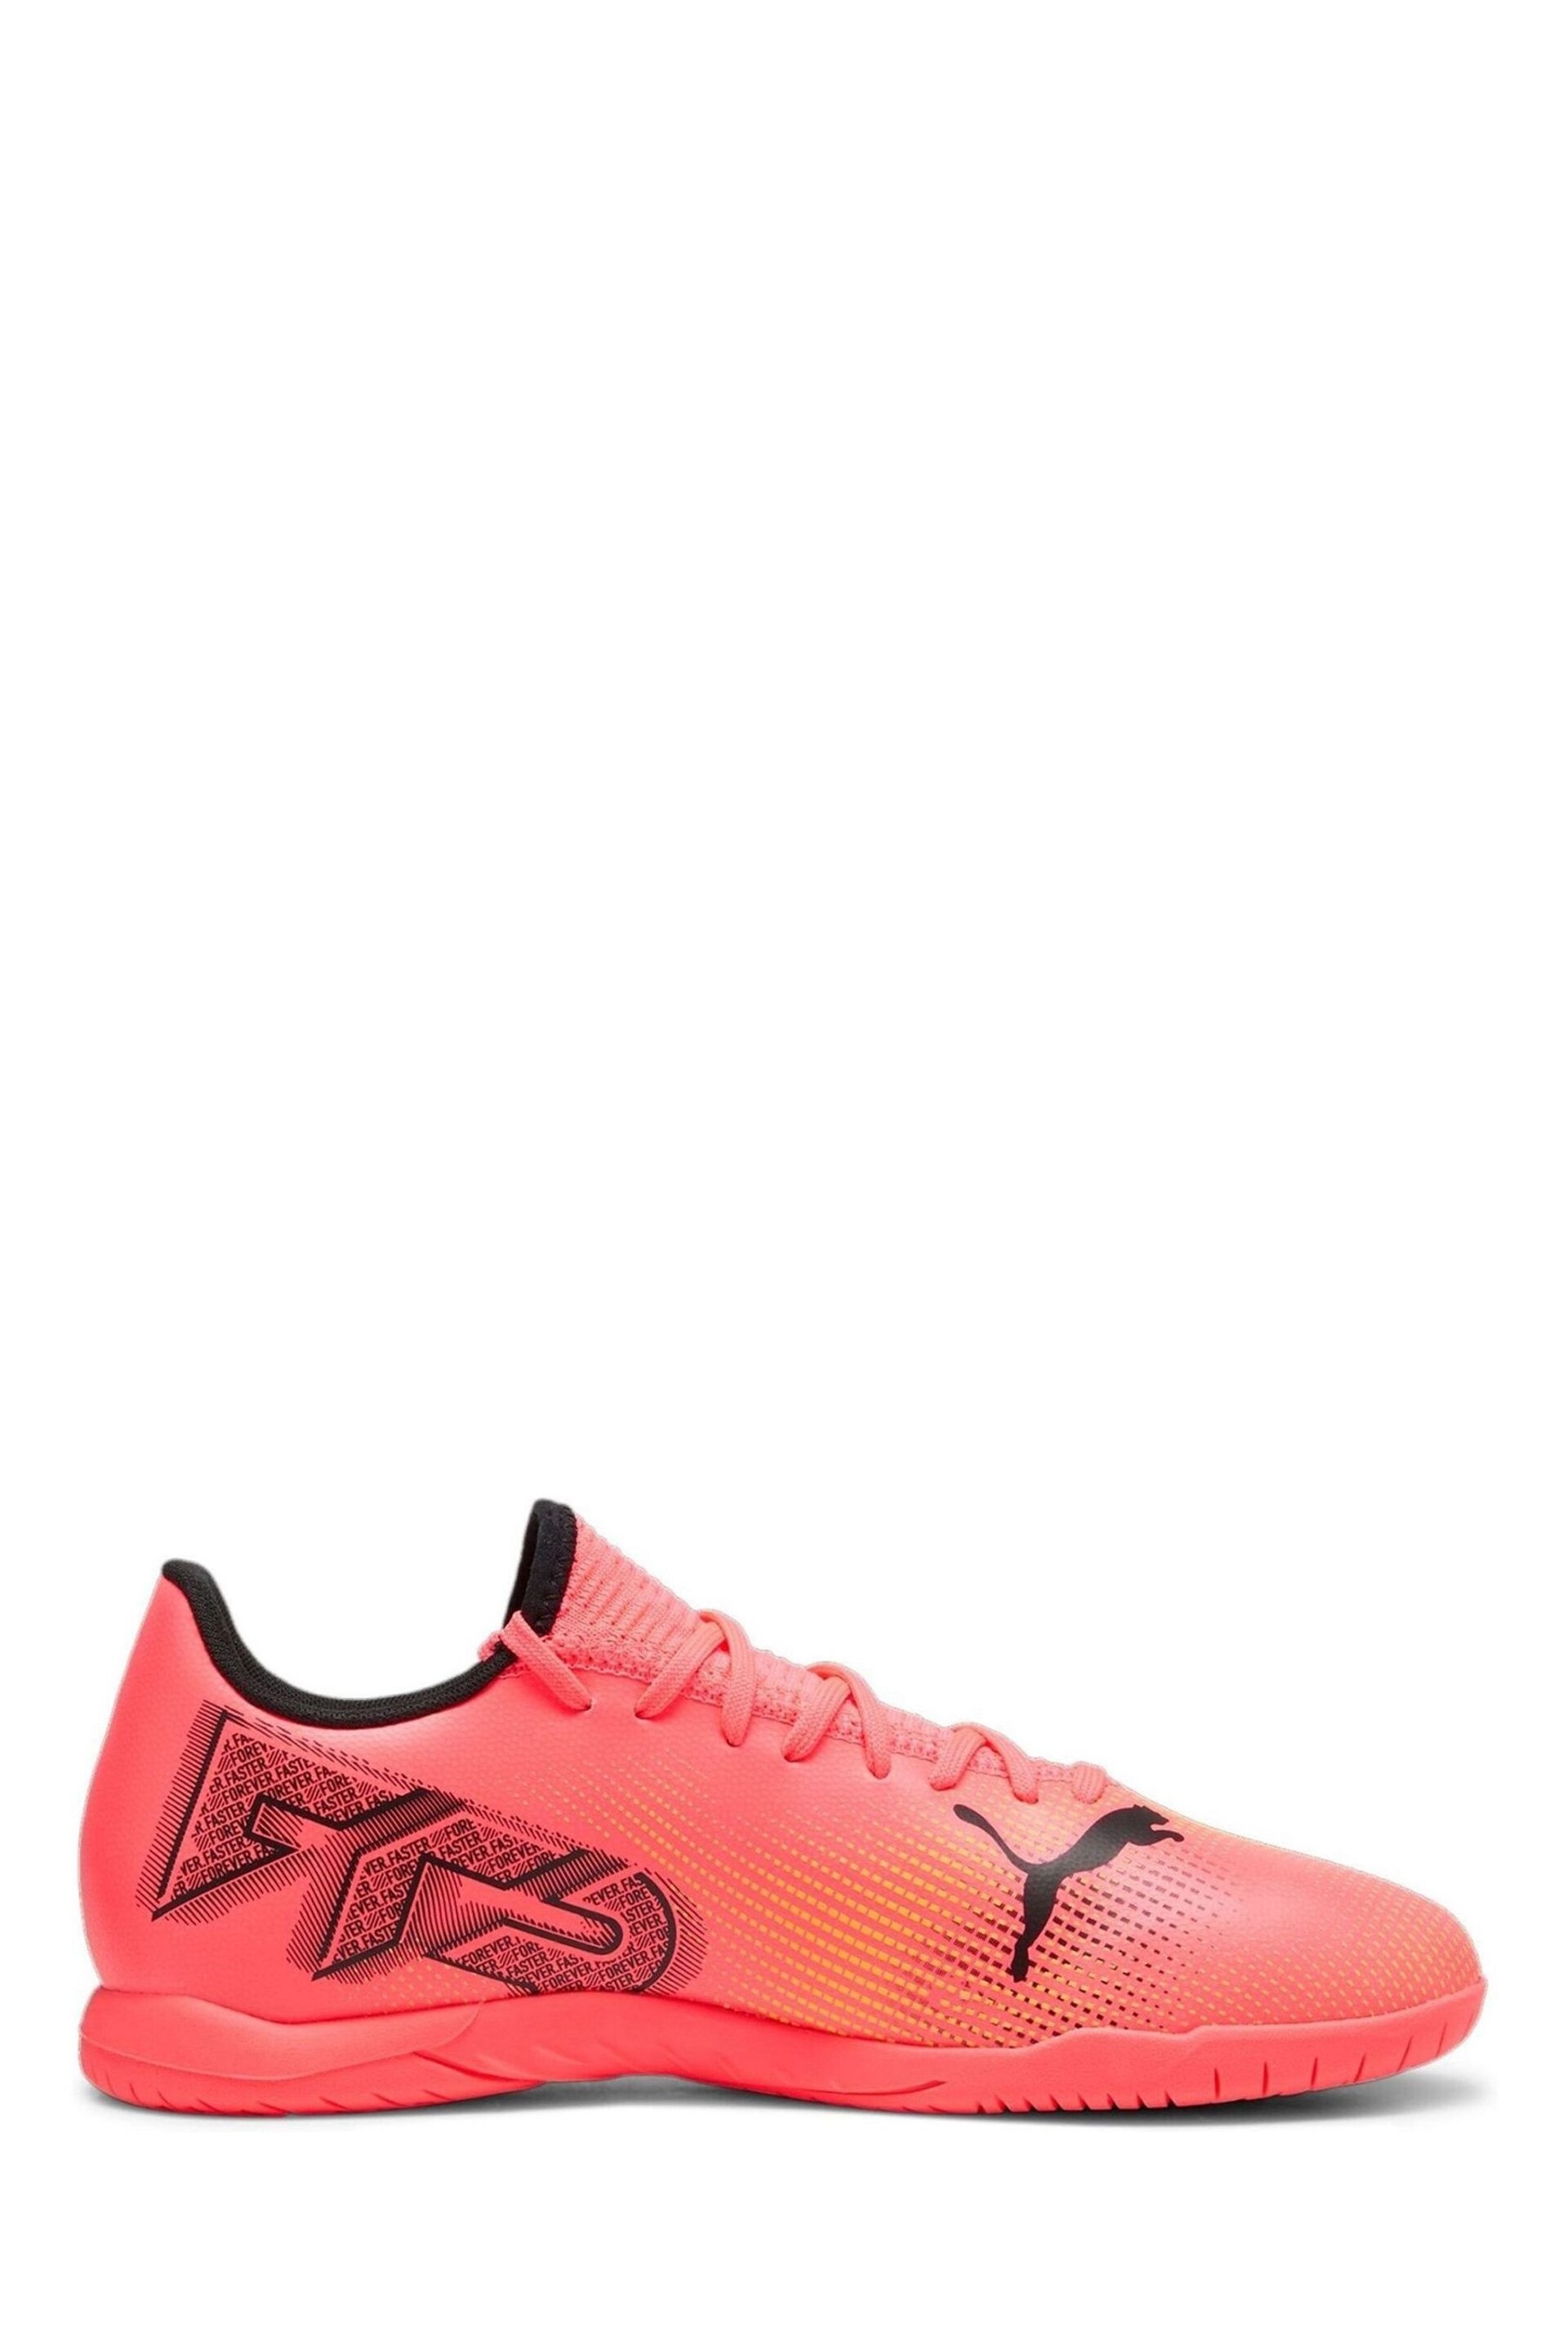 Puma Pink Mens Future 7 Play It Football Boots - Image 1 of 6